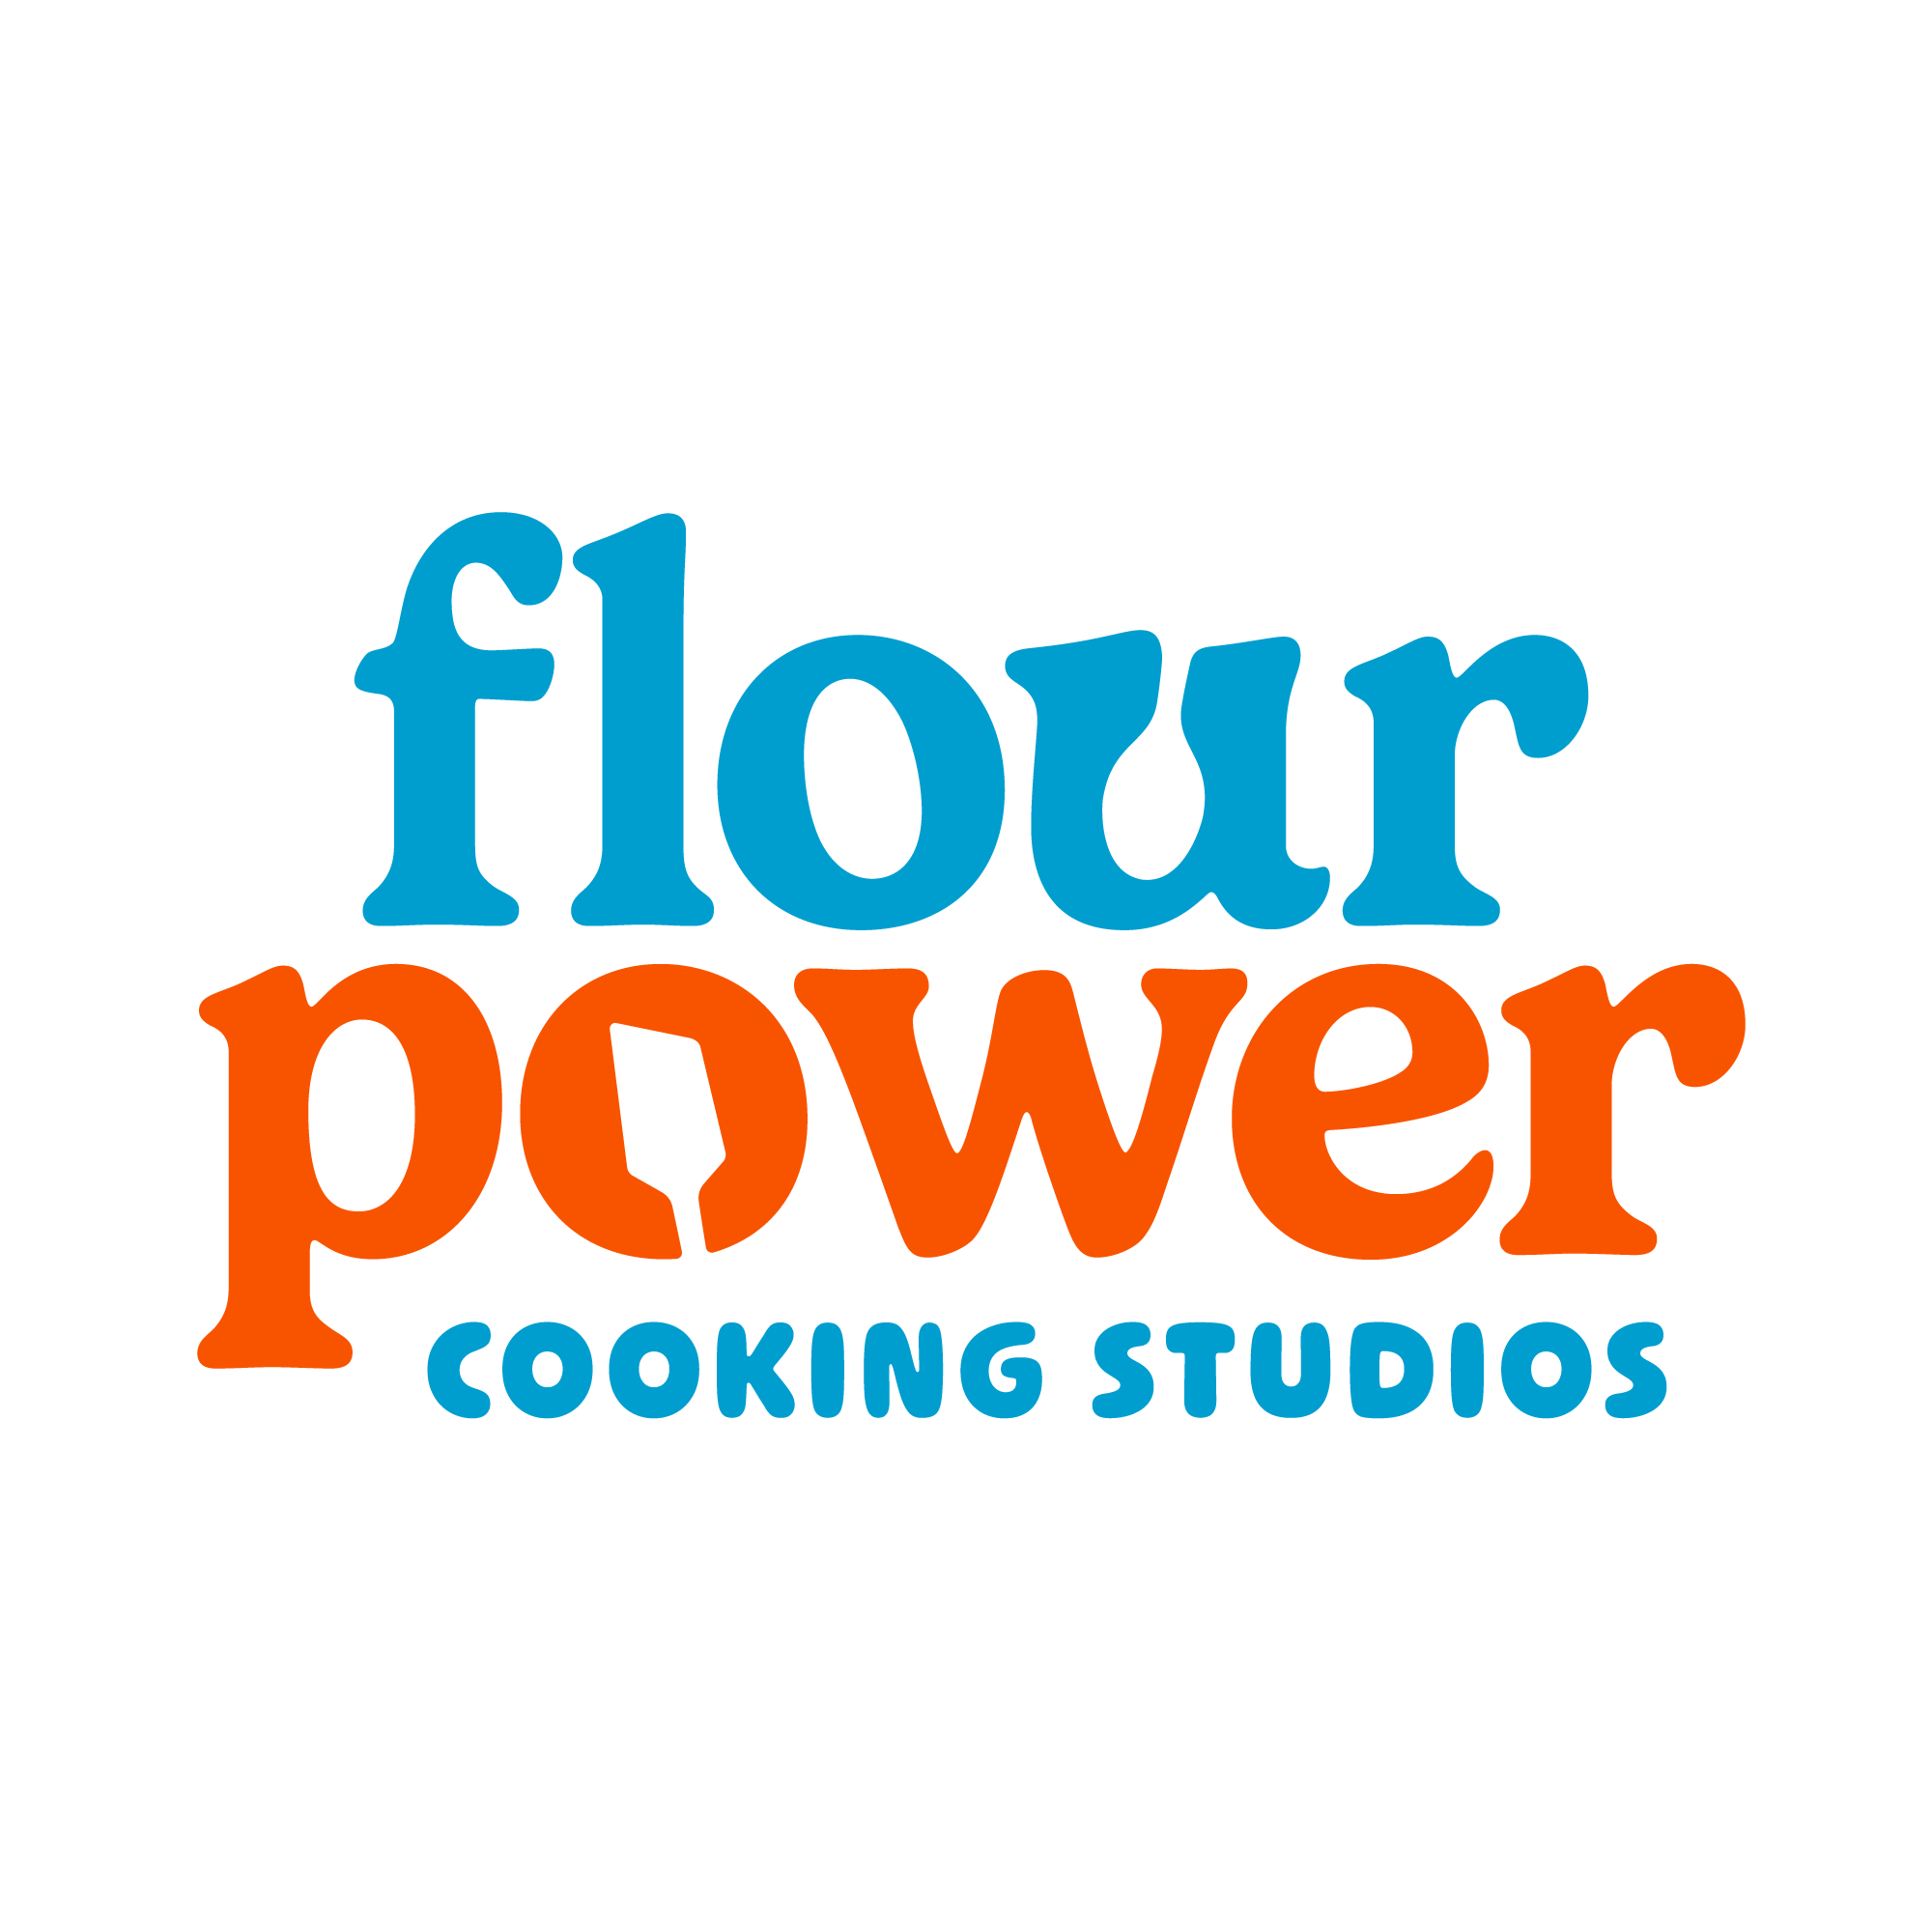 Flour Power Cooking Studios Nashville - Brentwood, TN 37027 - (615)961-3466 | ShowMeLocal.com